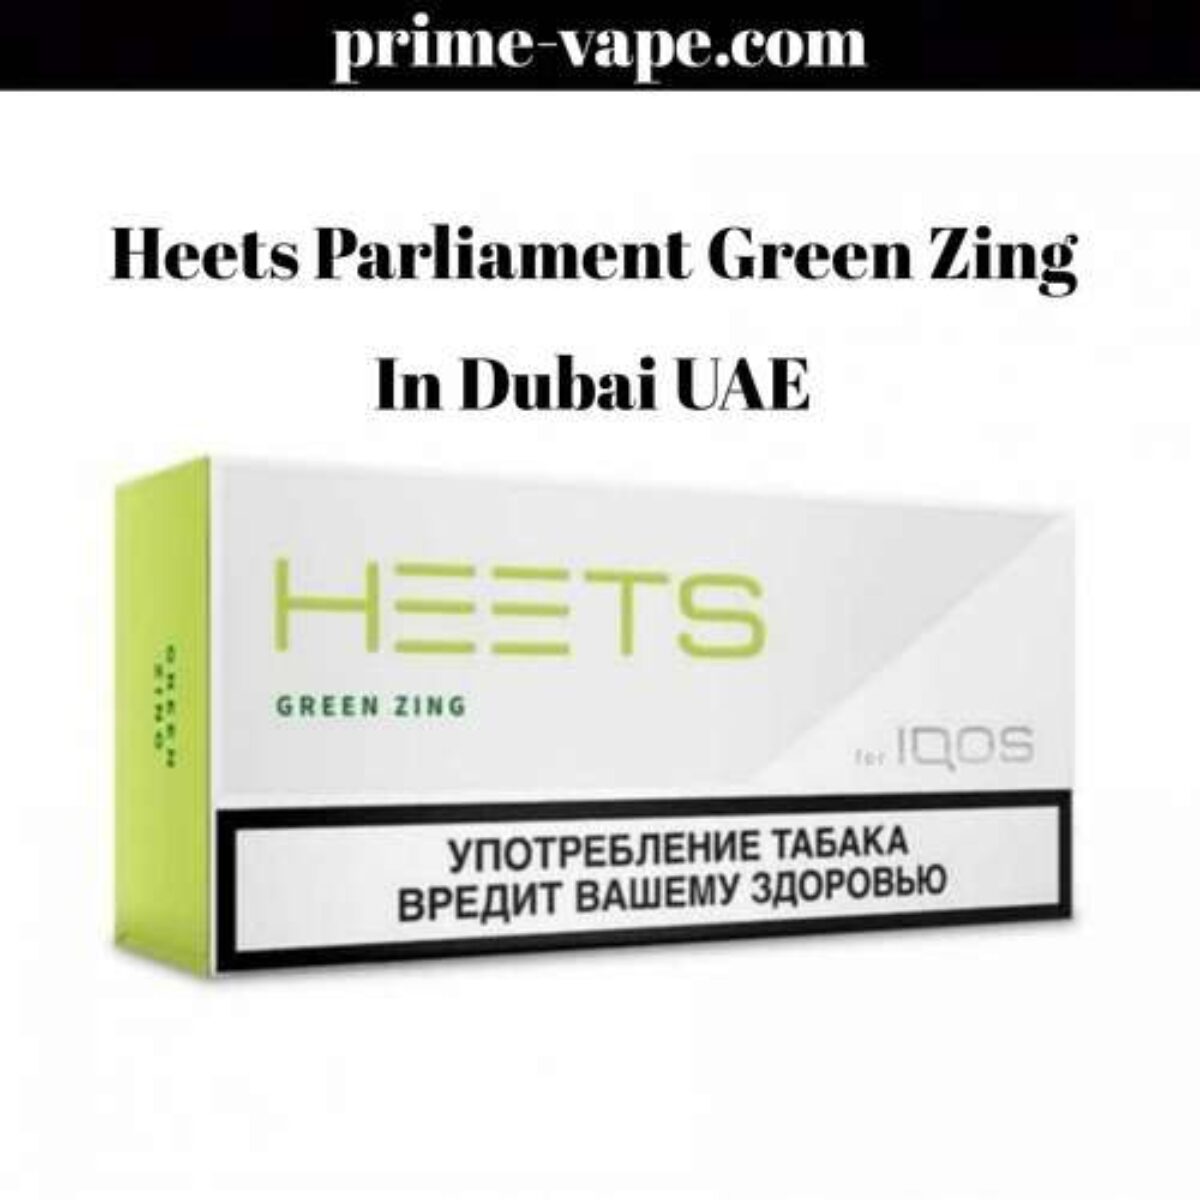 IQOS Heets Gold Selection Parliament – Vape King Emirates